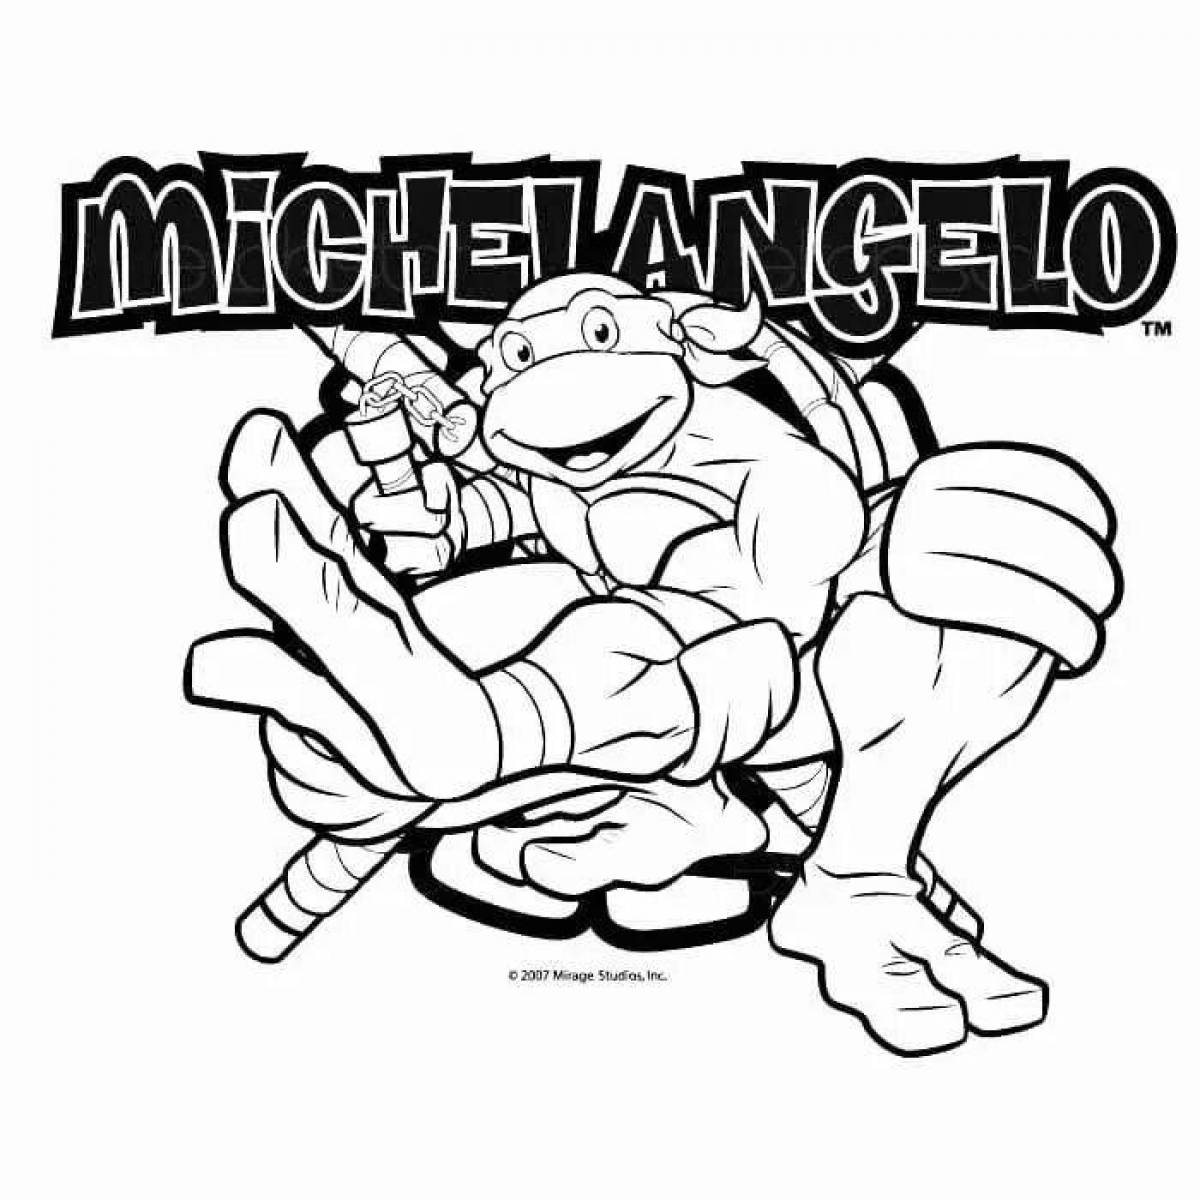 Michelangelo's Joyful Teenage Mutant Ninja Turtles coloring book